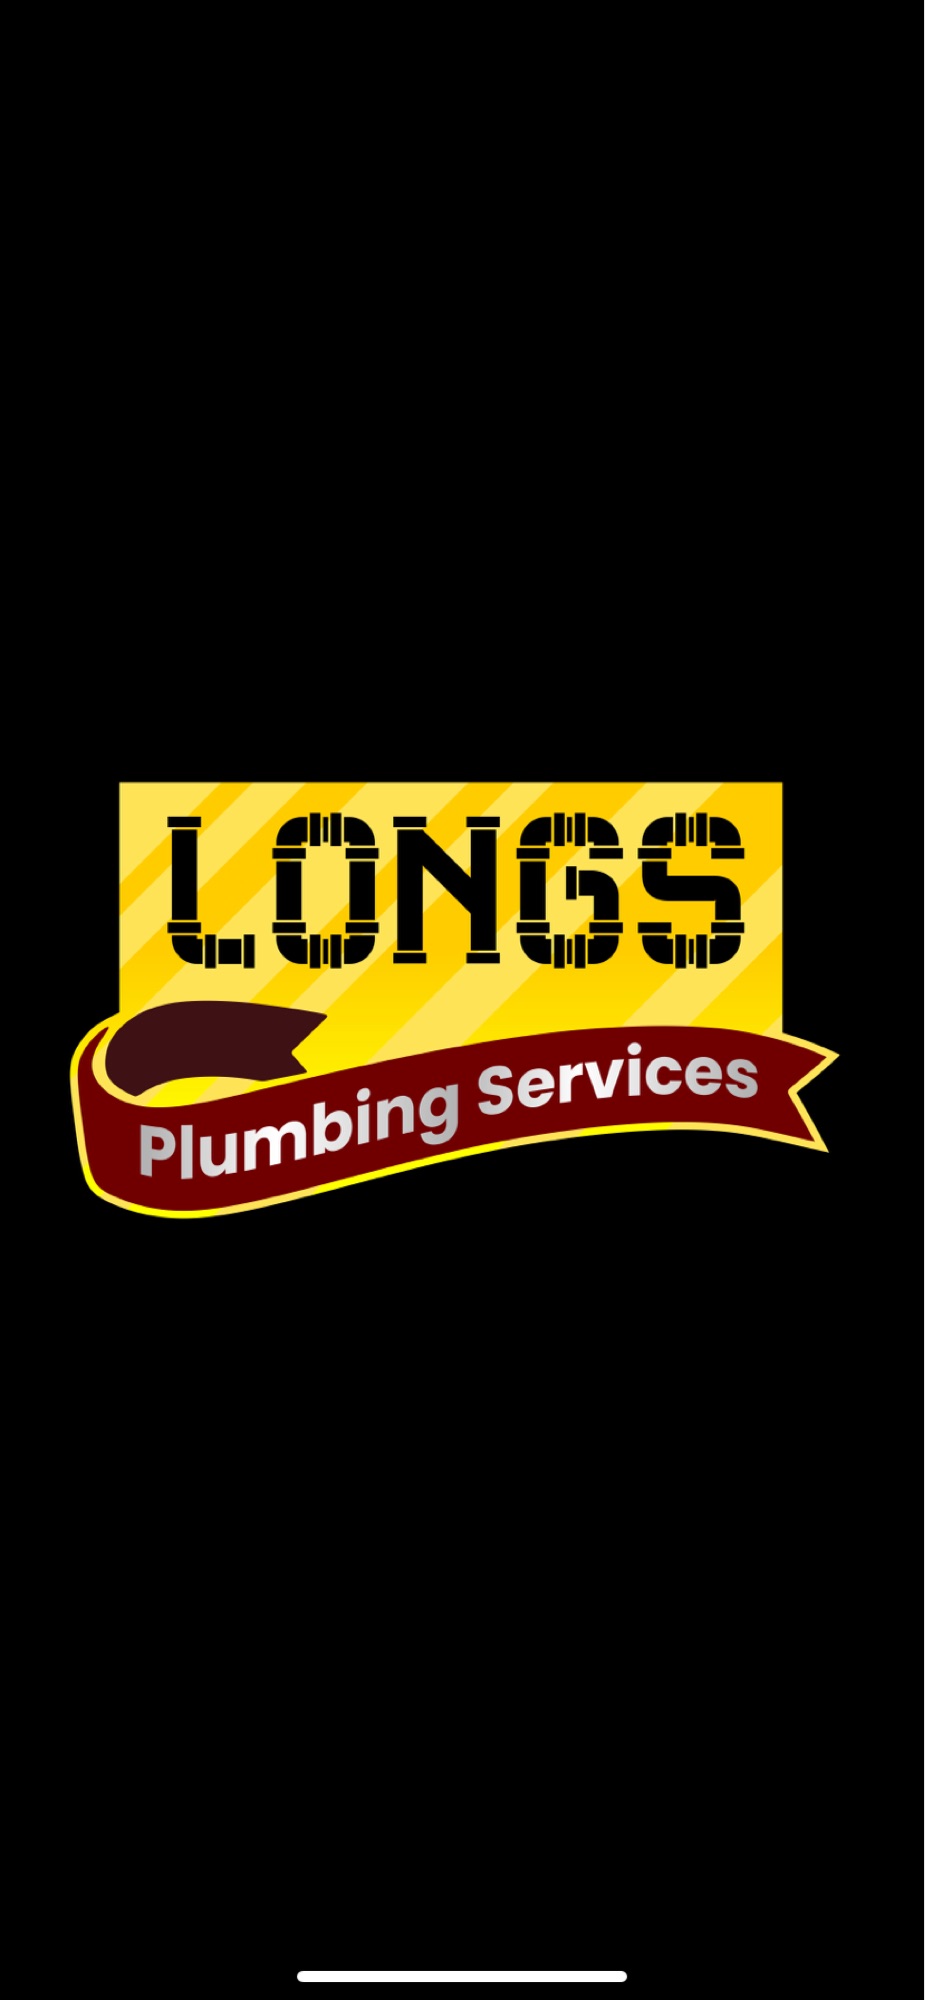 Long's Plumbing Services Logo